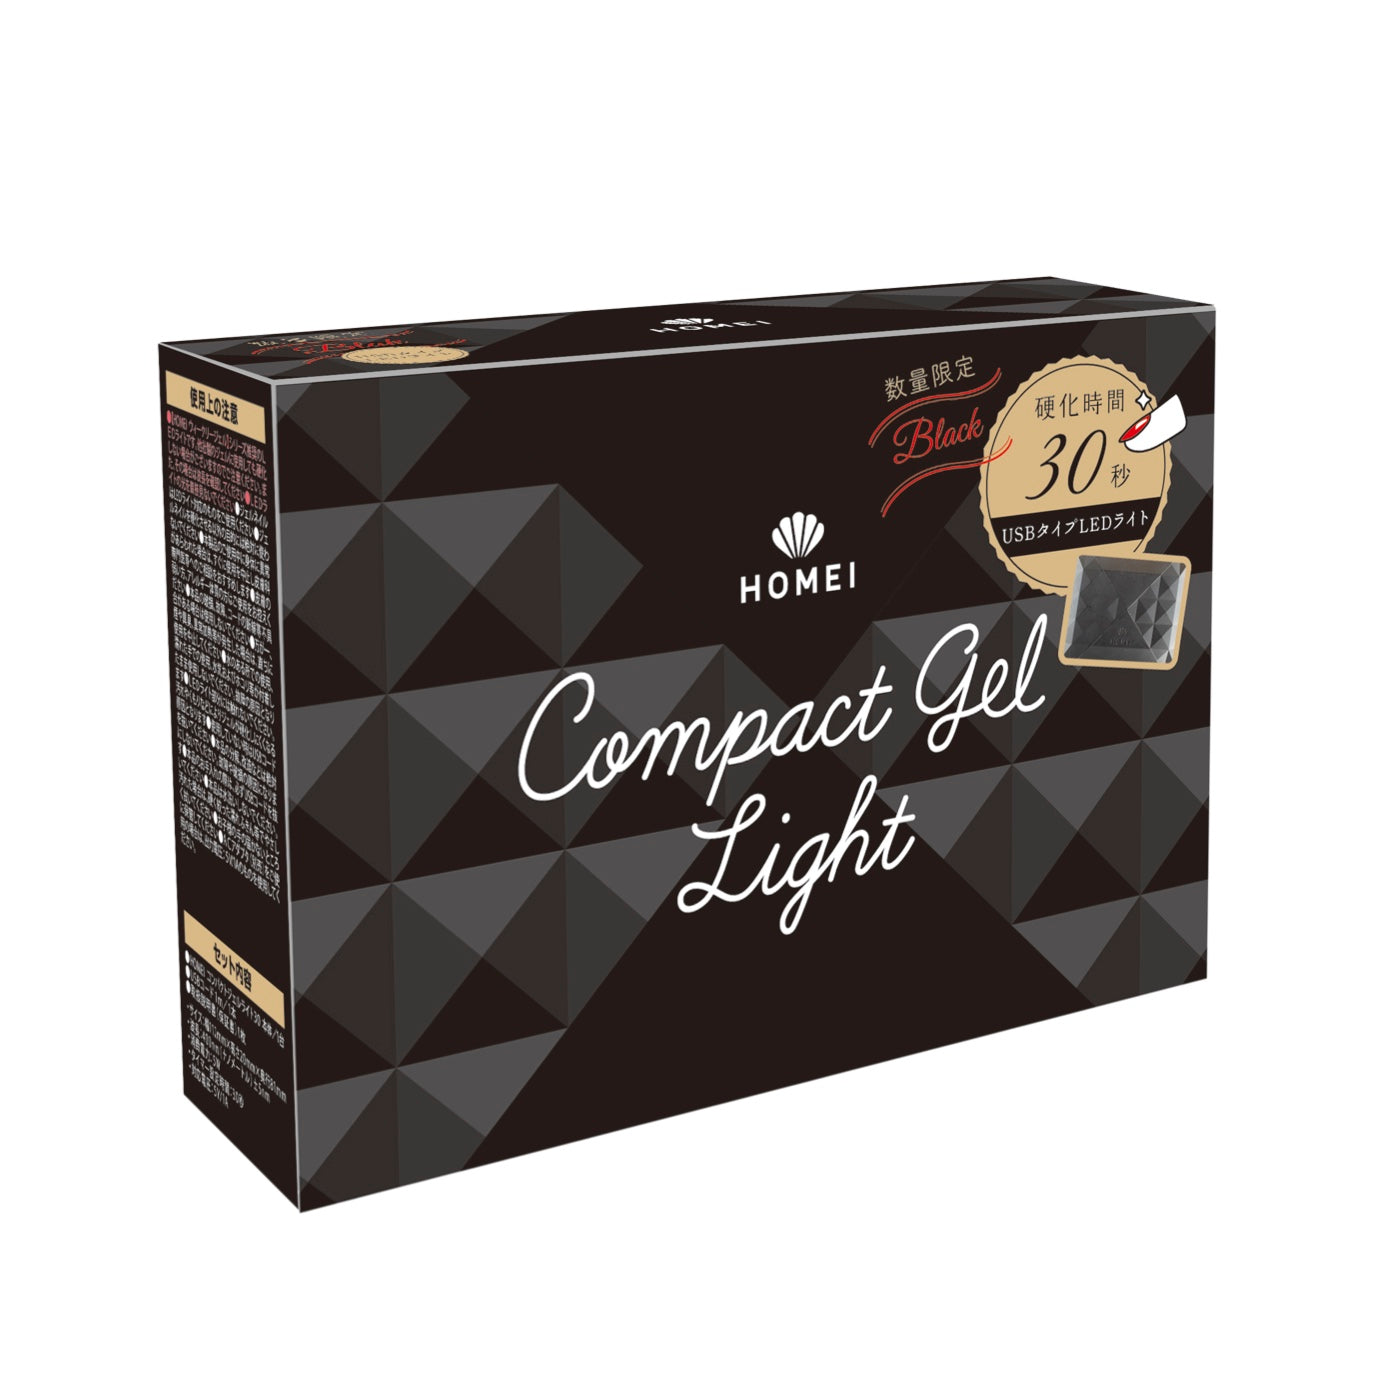 HOMEI Compact Gel LED Lamp 30 Black